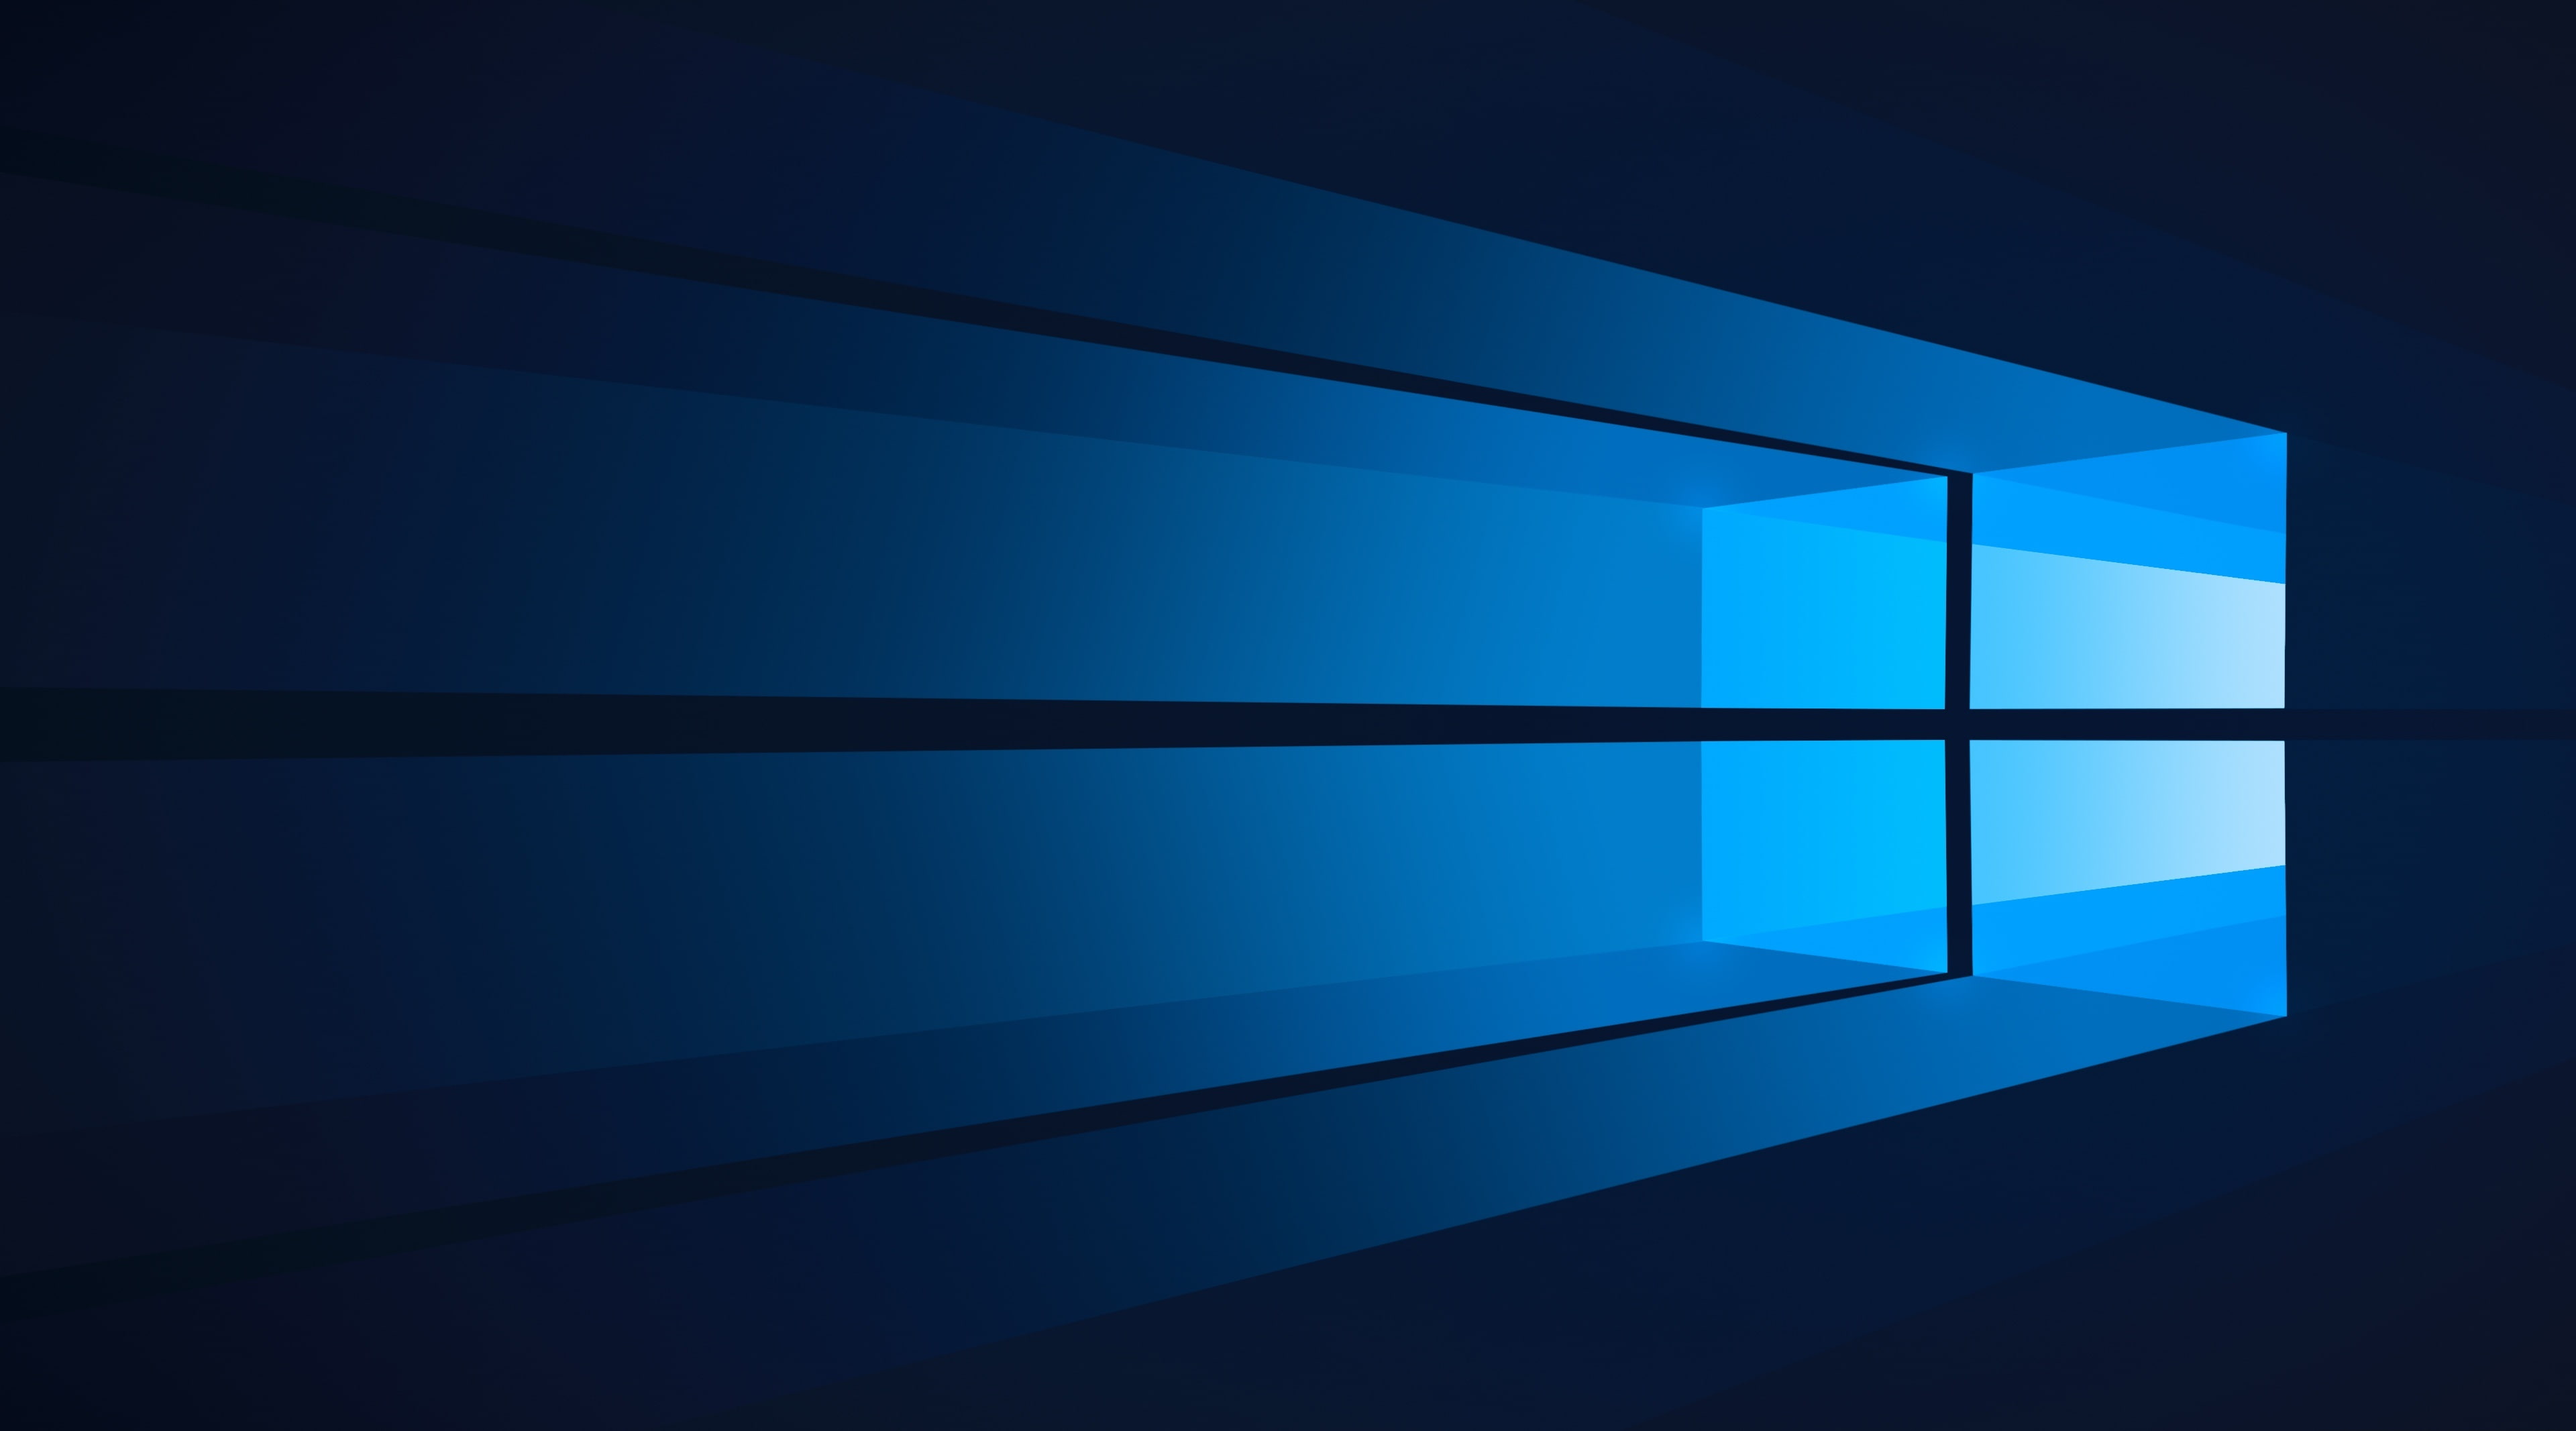 Flat Windows 10, Microsoft digital wallpaper, Blue, reflection